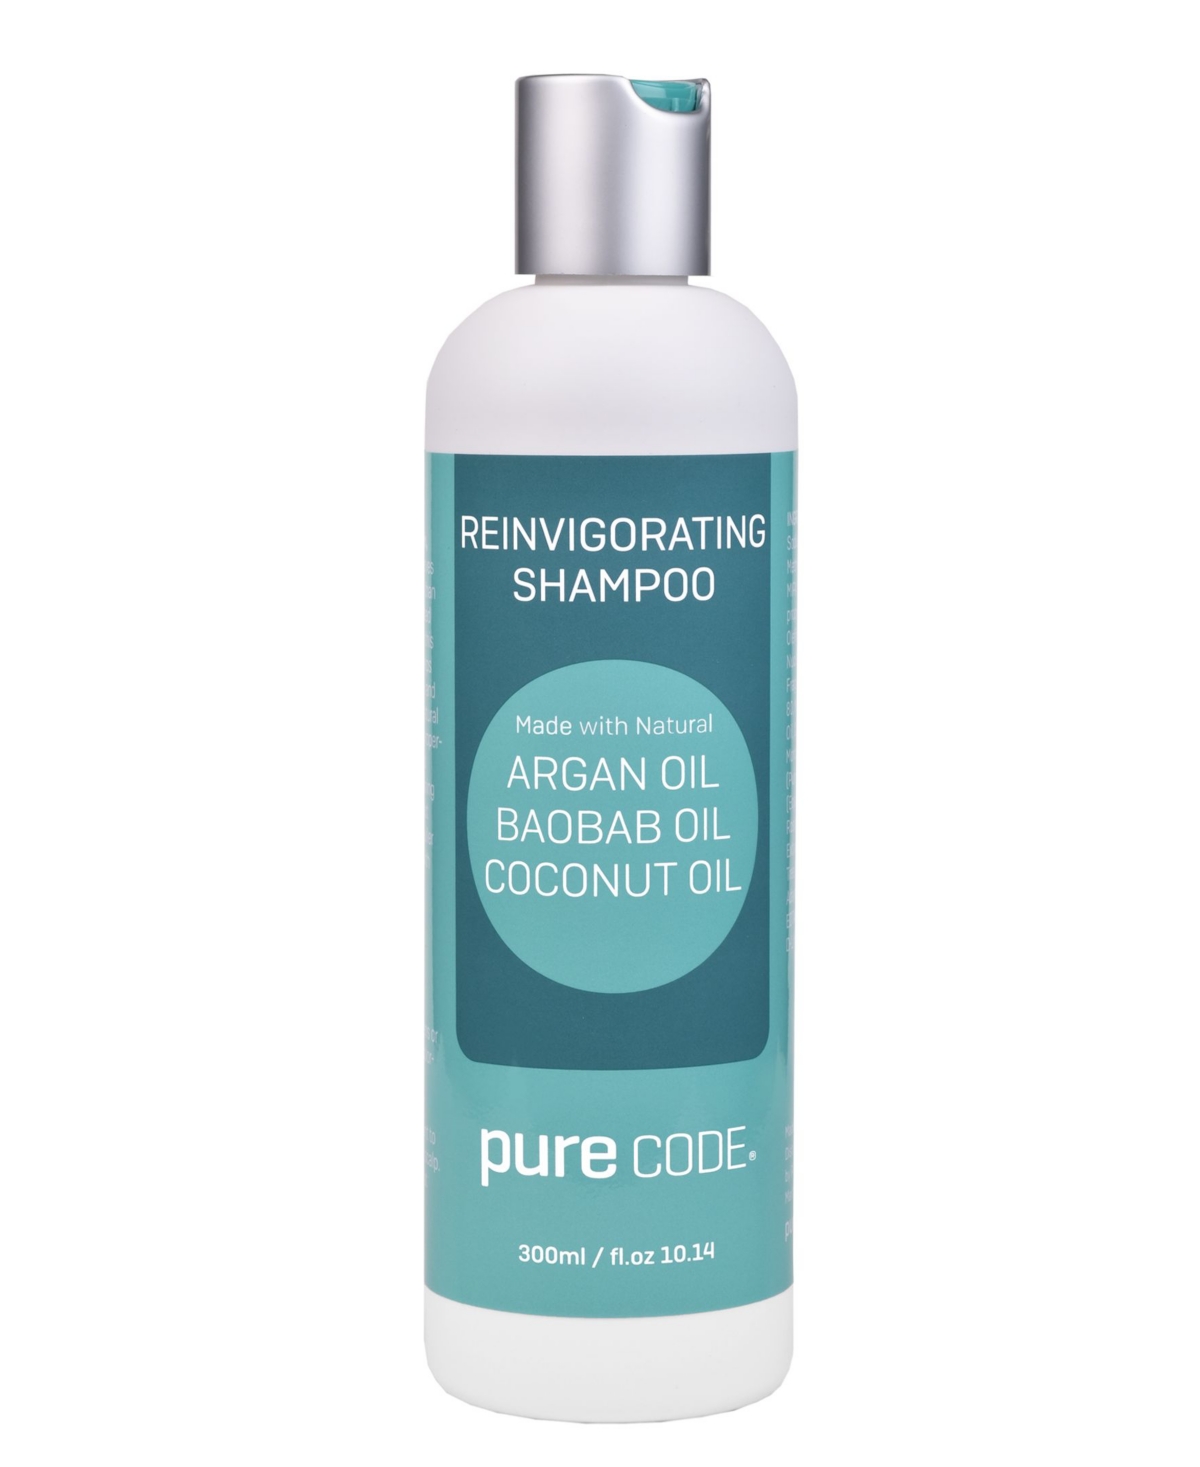 Roots Of Health Reinvigorating Shampoo, 10.14 oz. - White